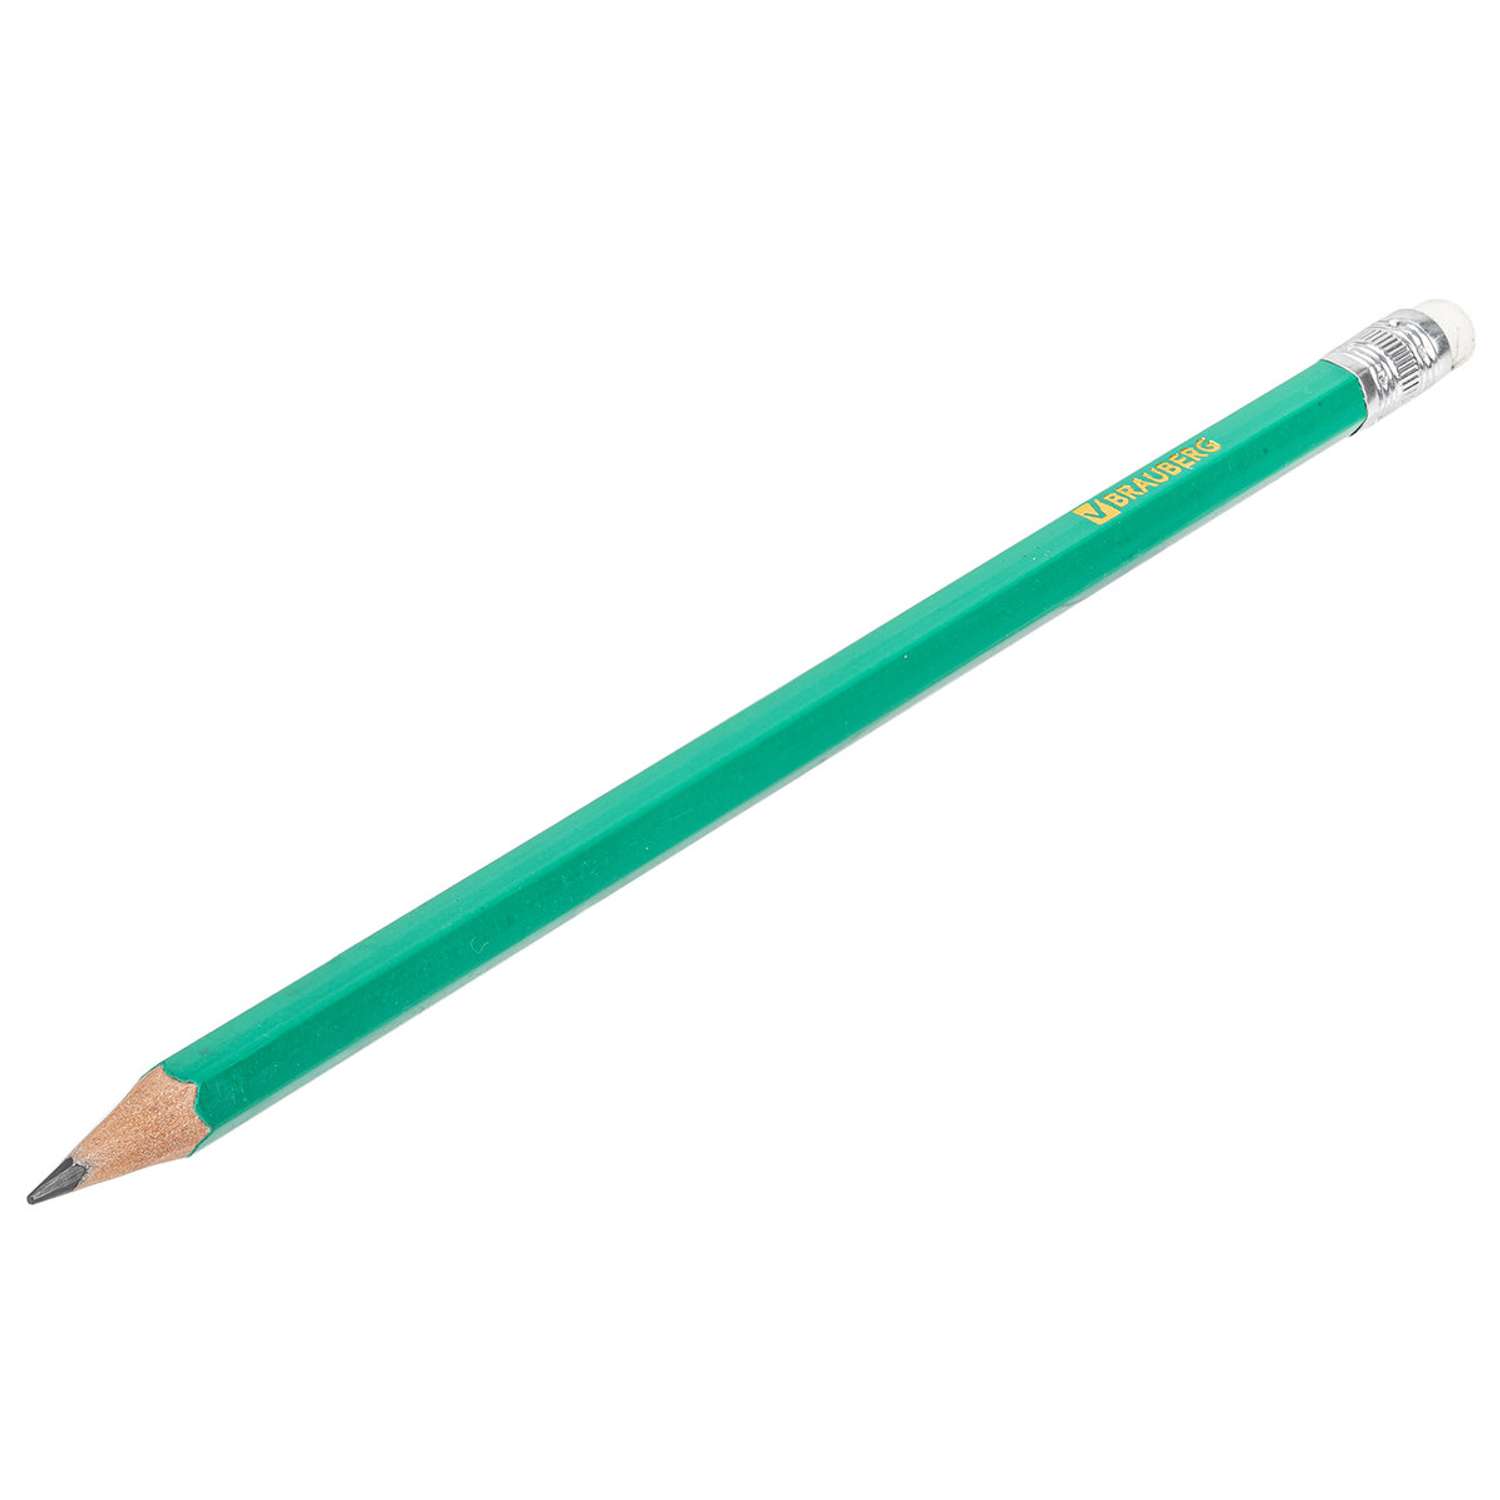 Простой карандаш зеленый с ластиком. Карандаш чернографитный Attache (зеленый корпус). Карандаши БРАУБЕРГ 120 цветов. Простые карандаши отзывы